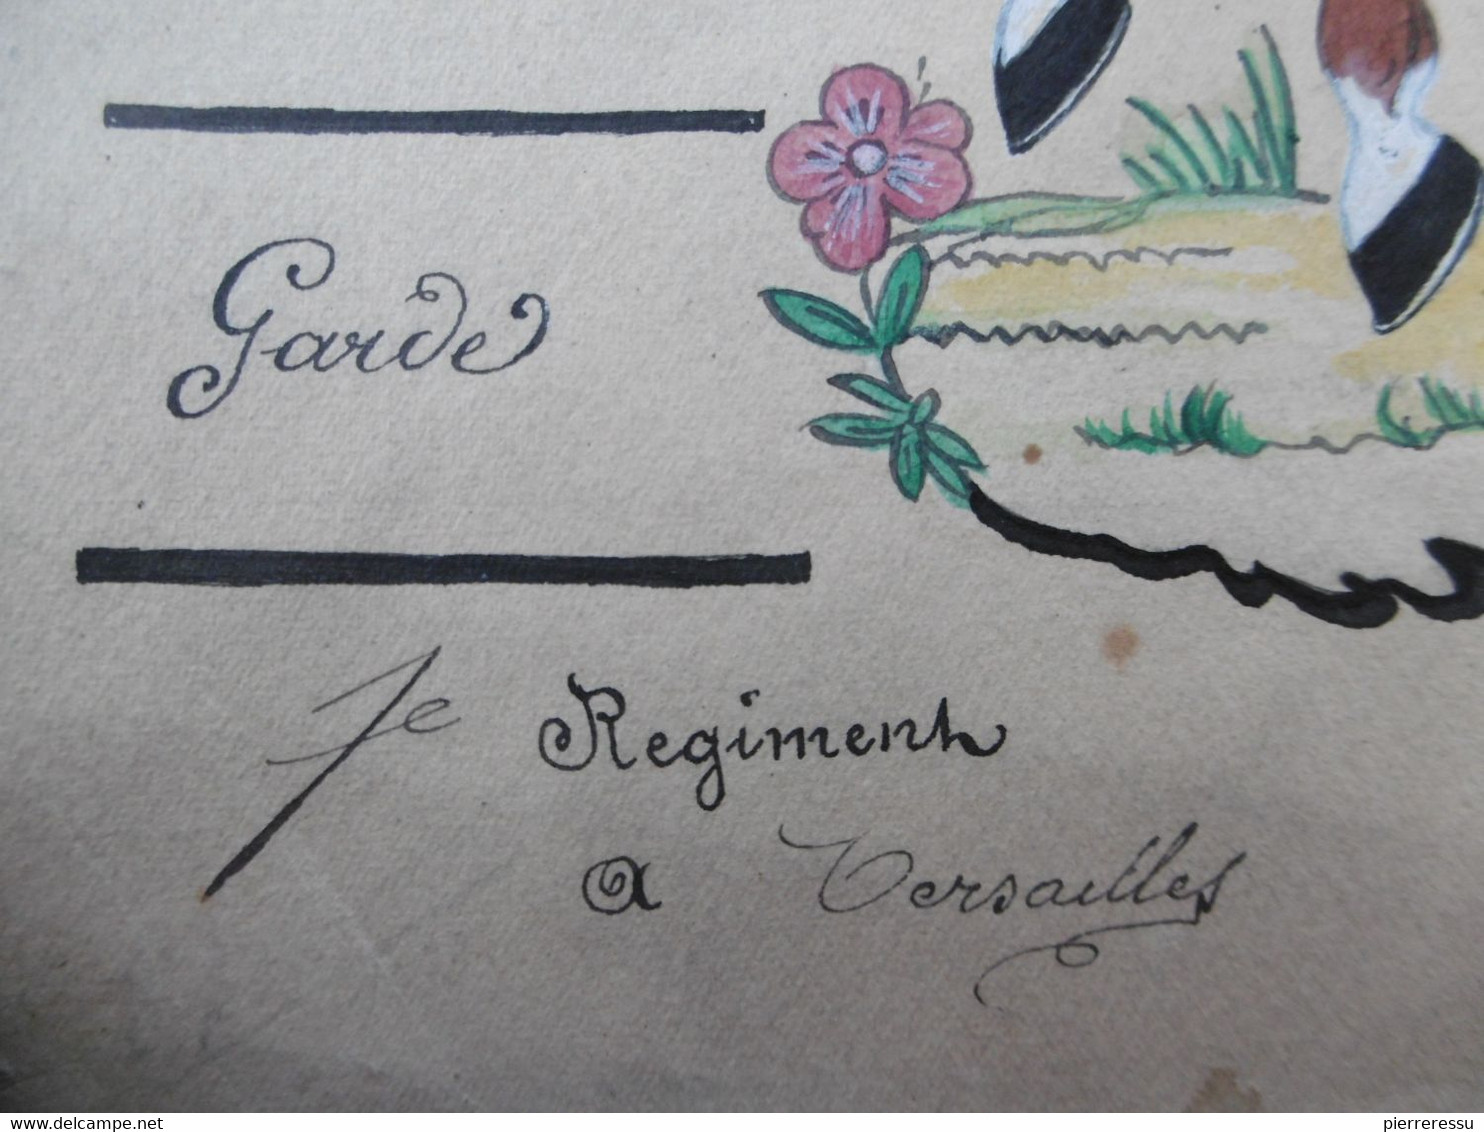 GARDE IMPERIALE GARDE D HONNEUR 1er REGIMENT DESSIN A LA GOUACHE 1813 BONAPARTE & JOSEPHINE - Documenti